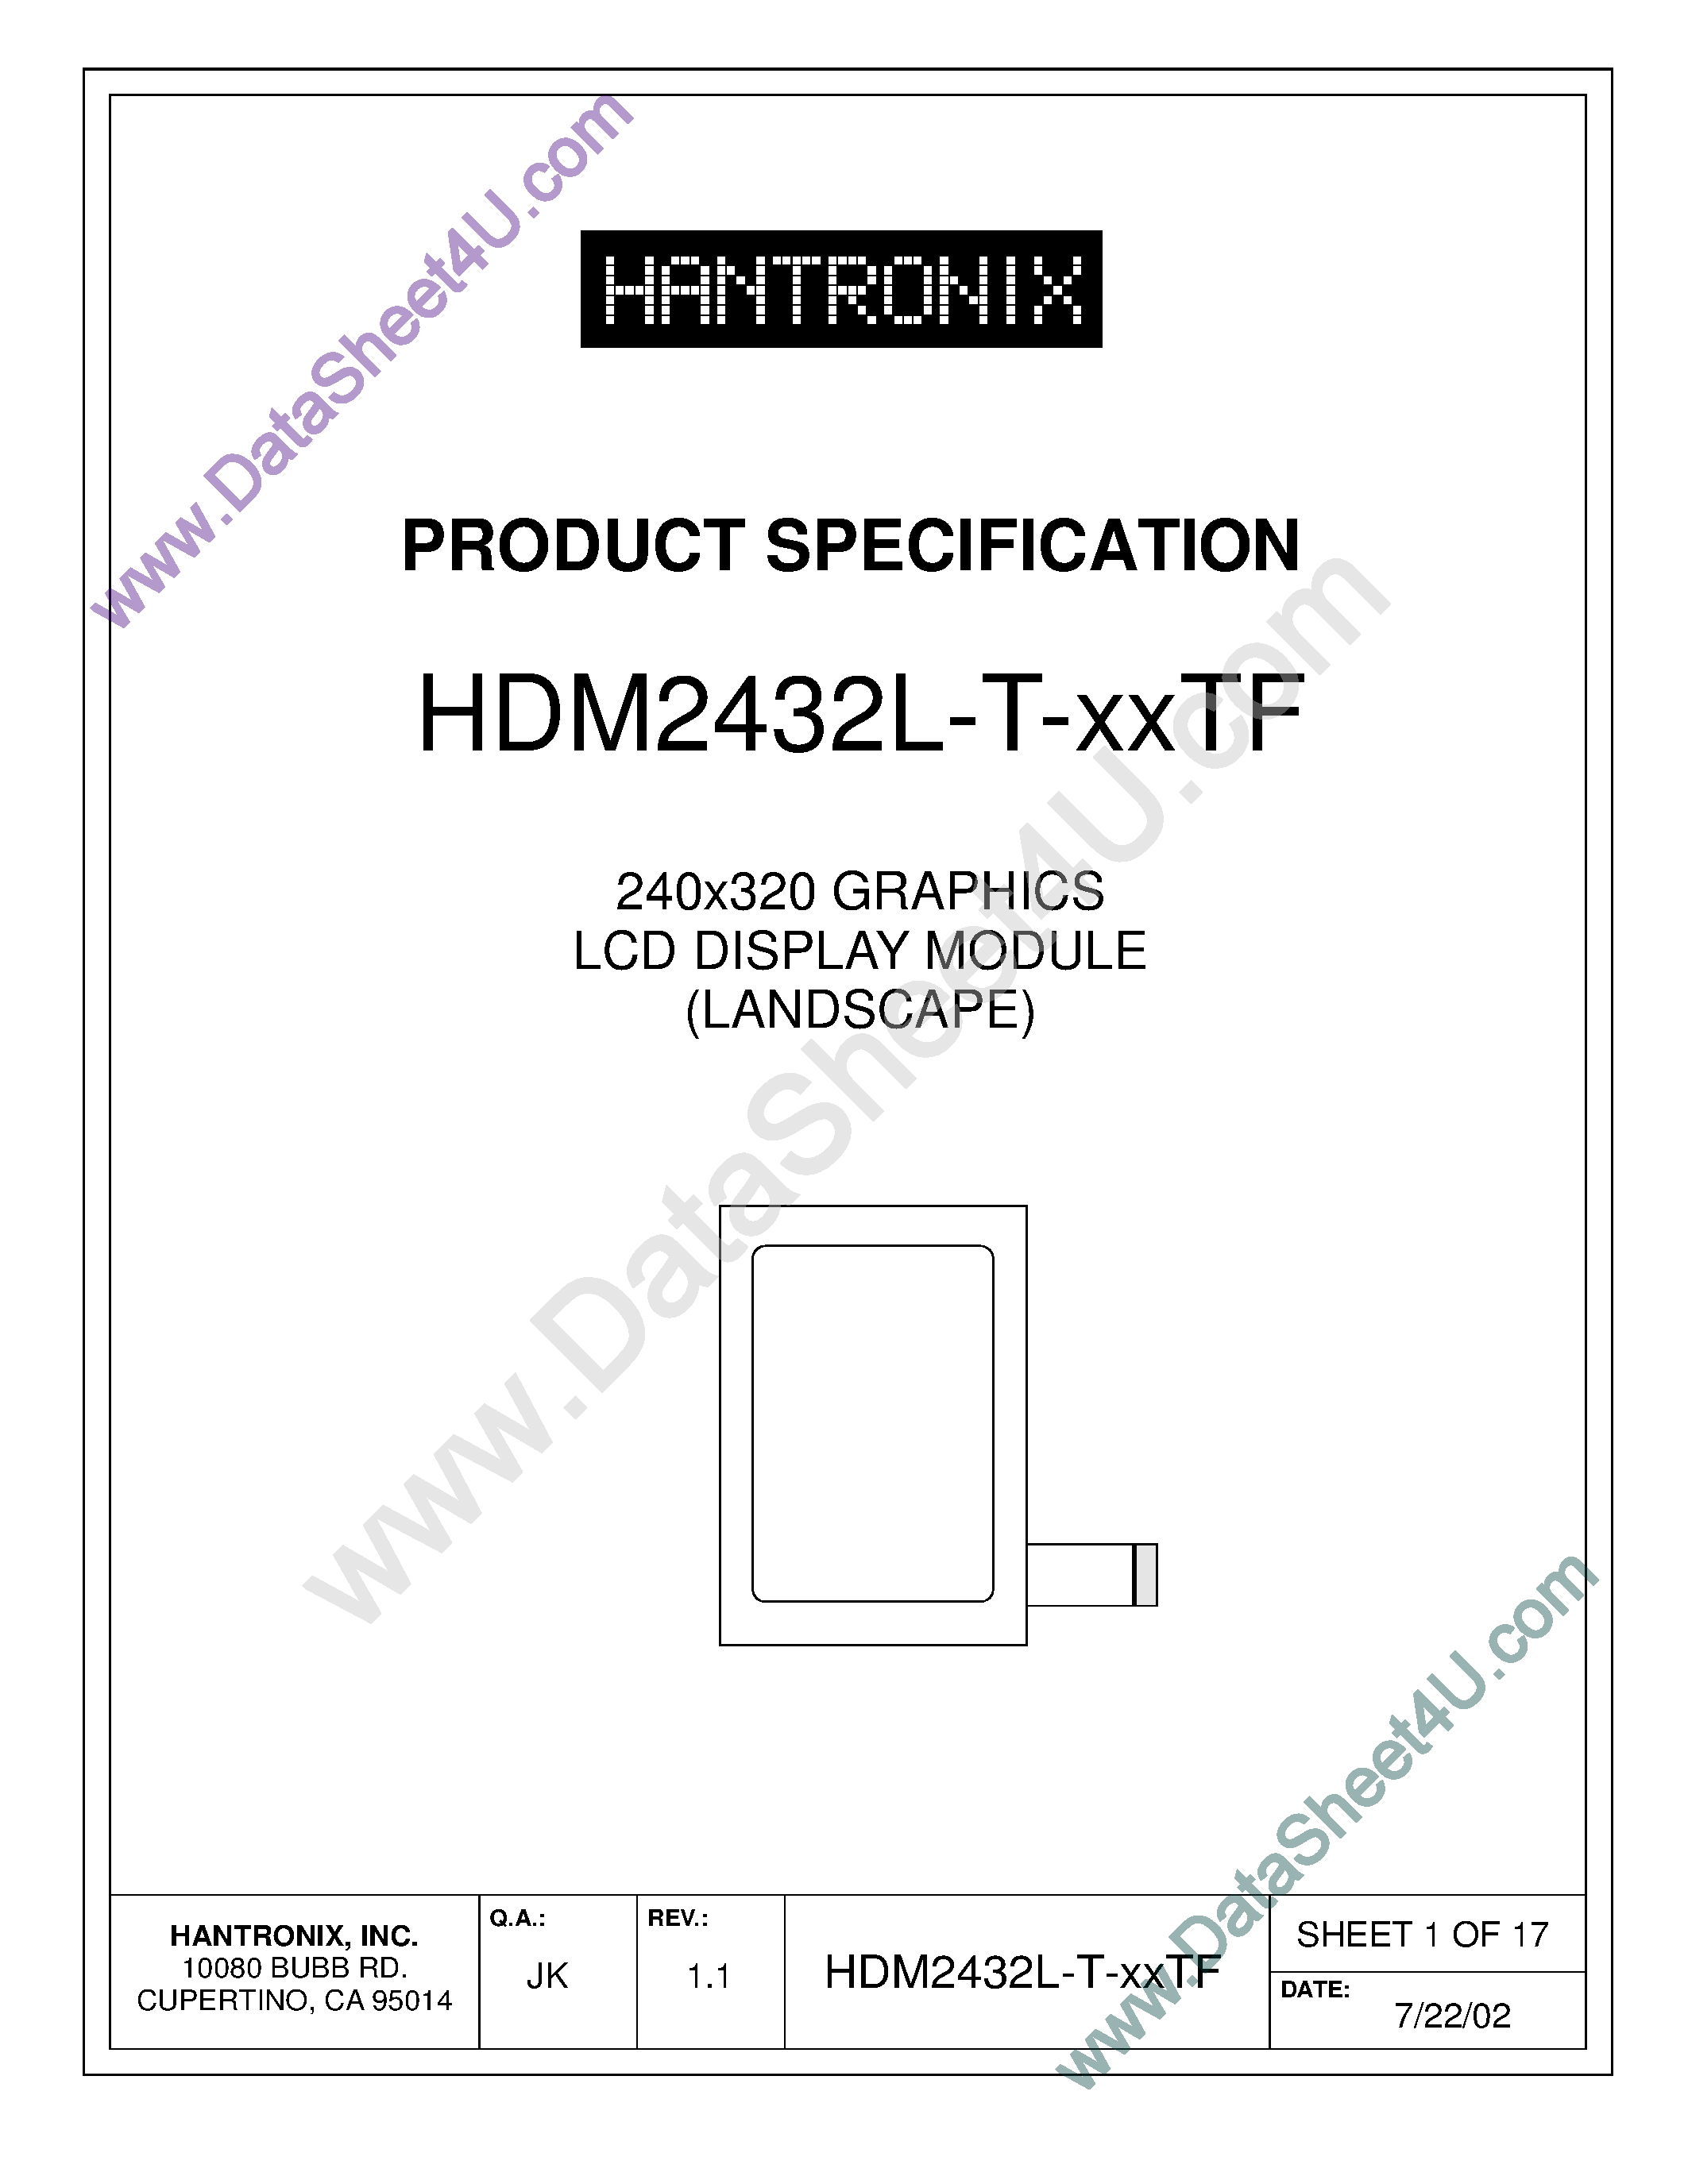 Datasheet HDMs2432l-t-xxtf - LCD DISPLAY MODULE page 1